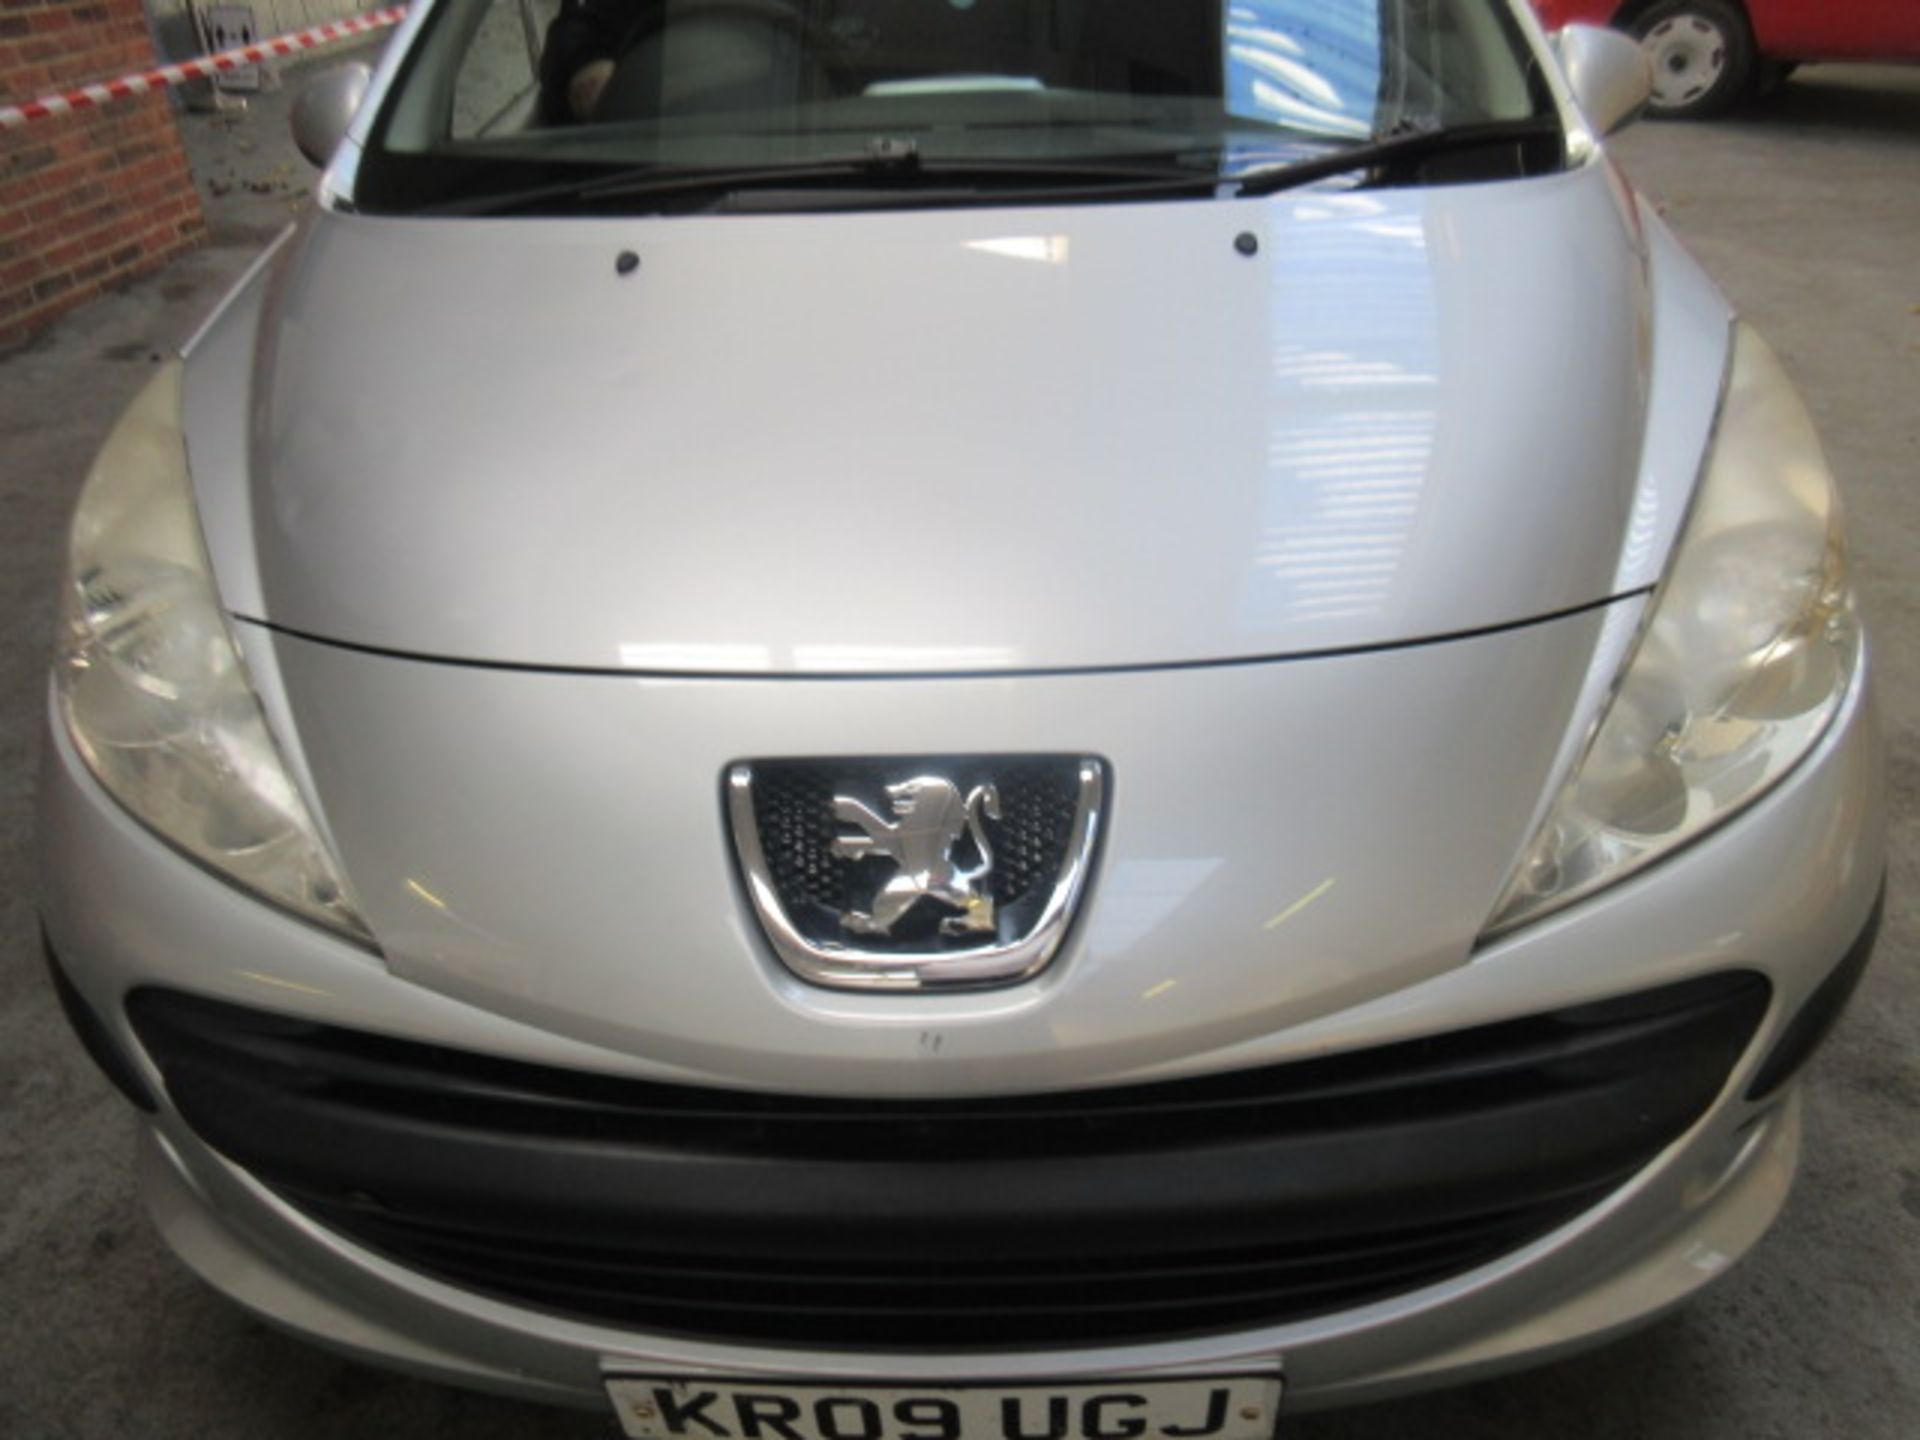 09 09 Peugeot 207 HDI - Image 4 of 8